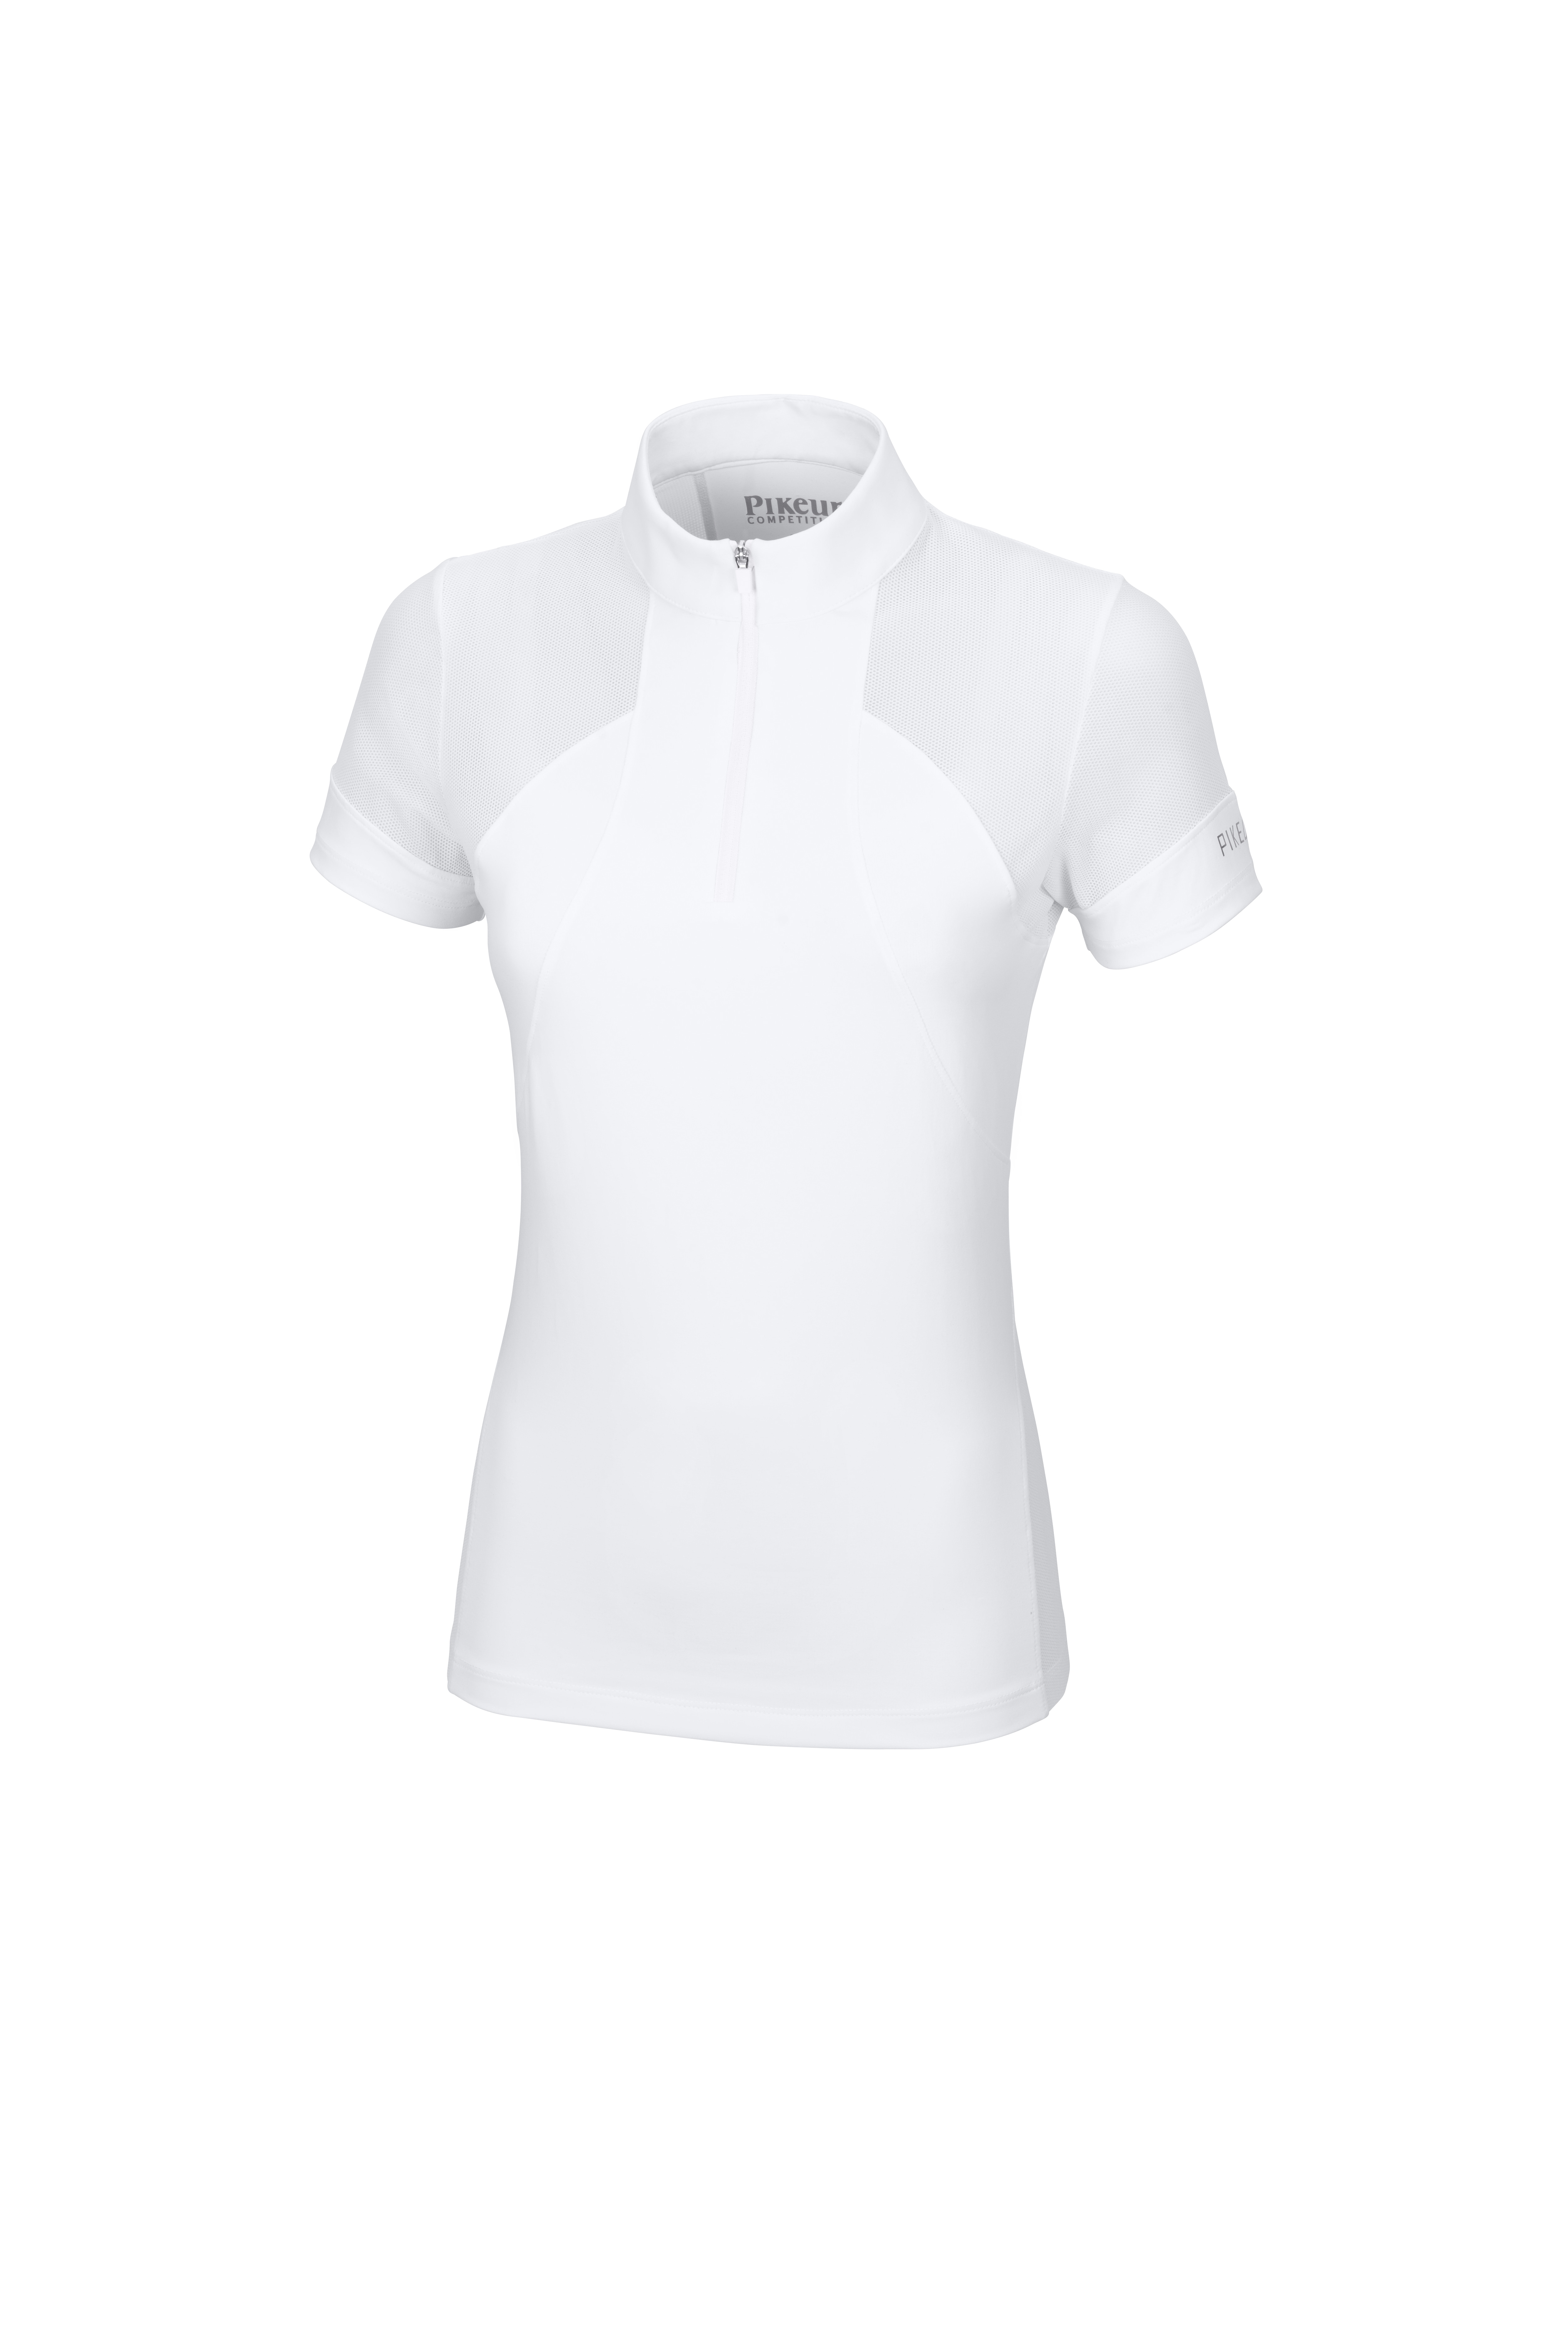 Jessie Competition shirt - White